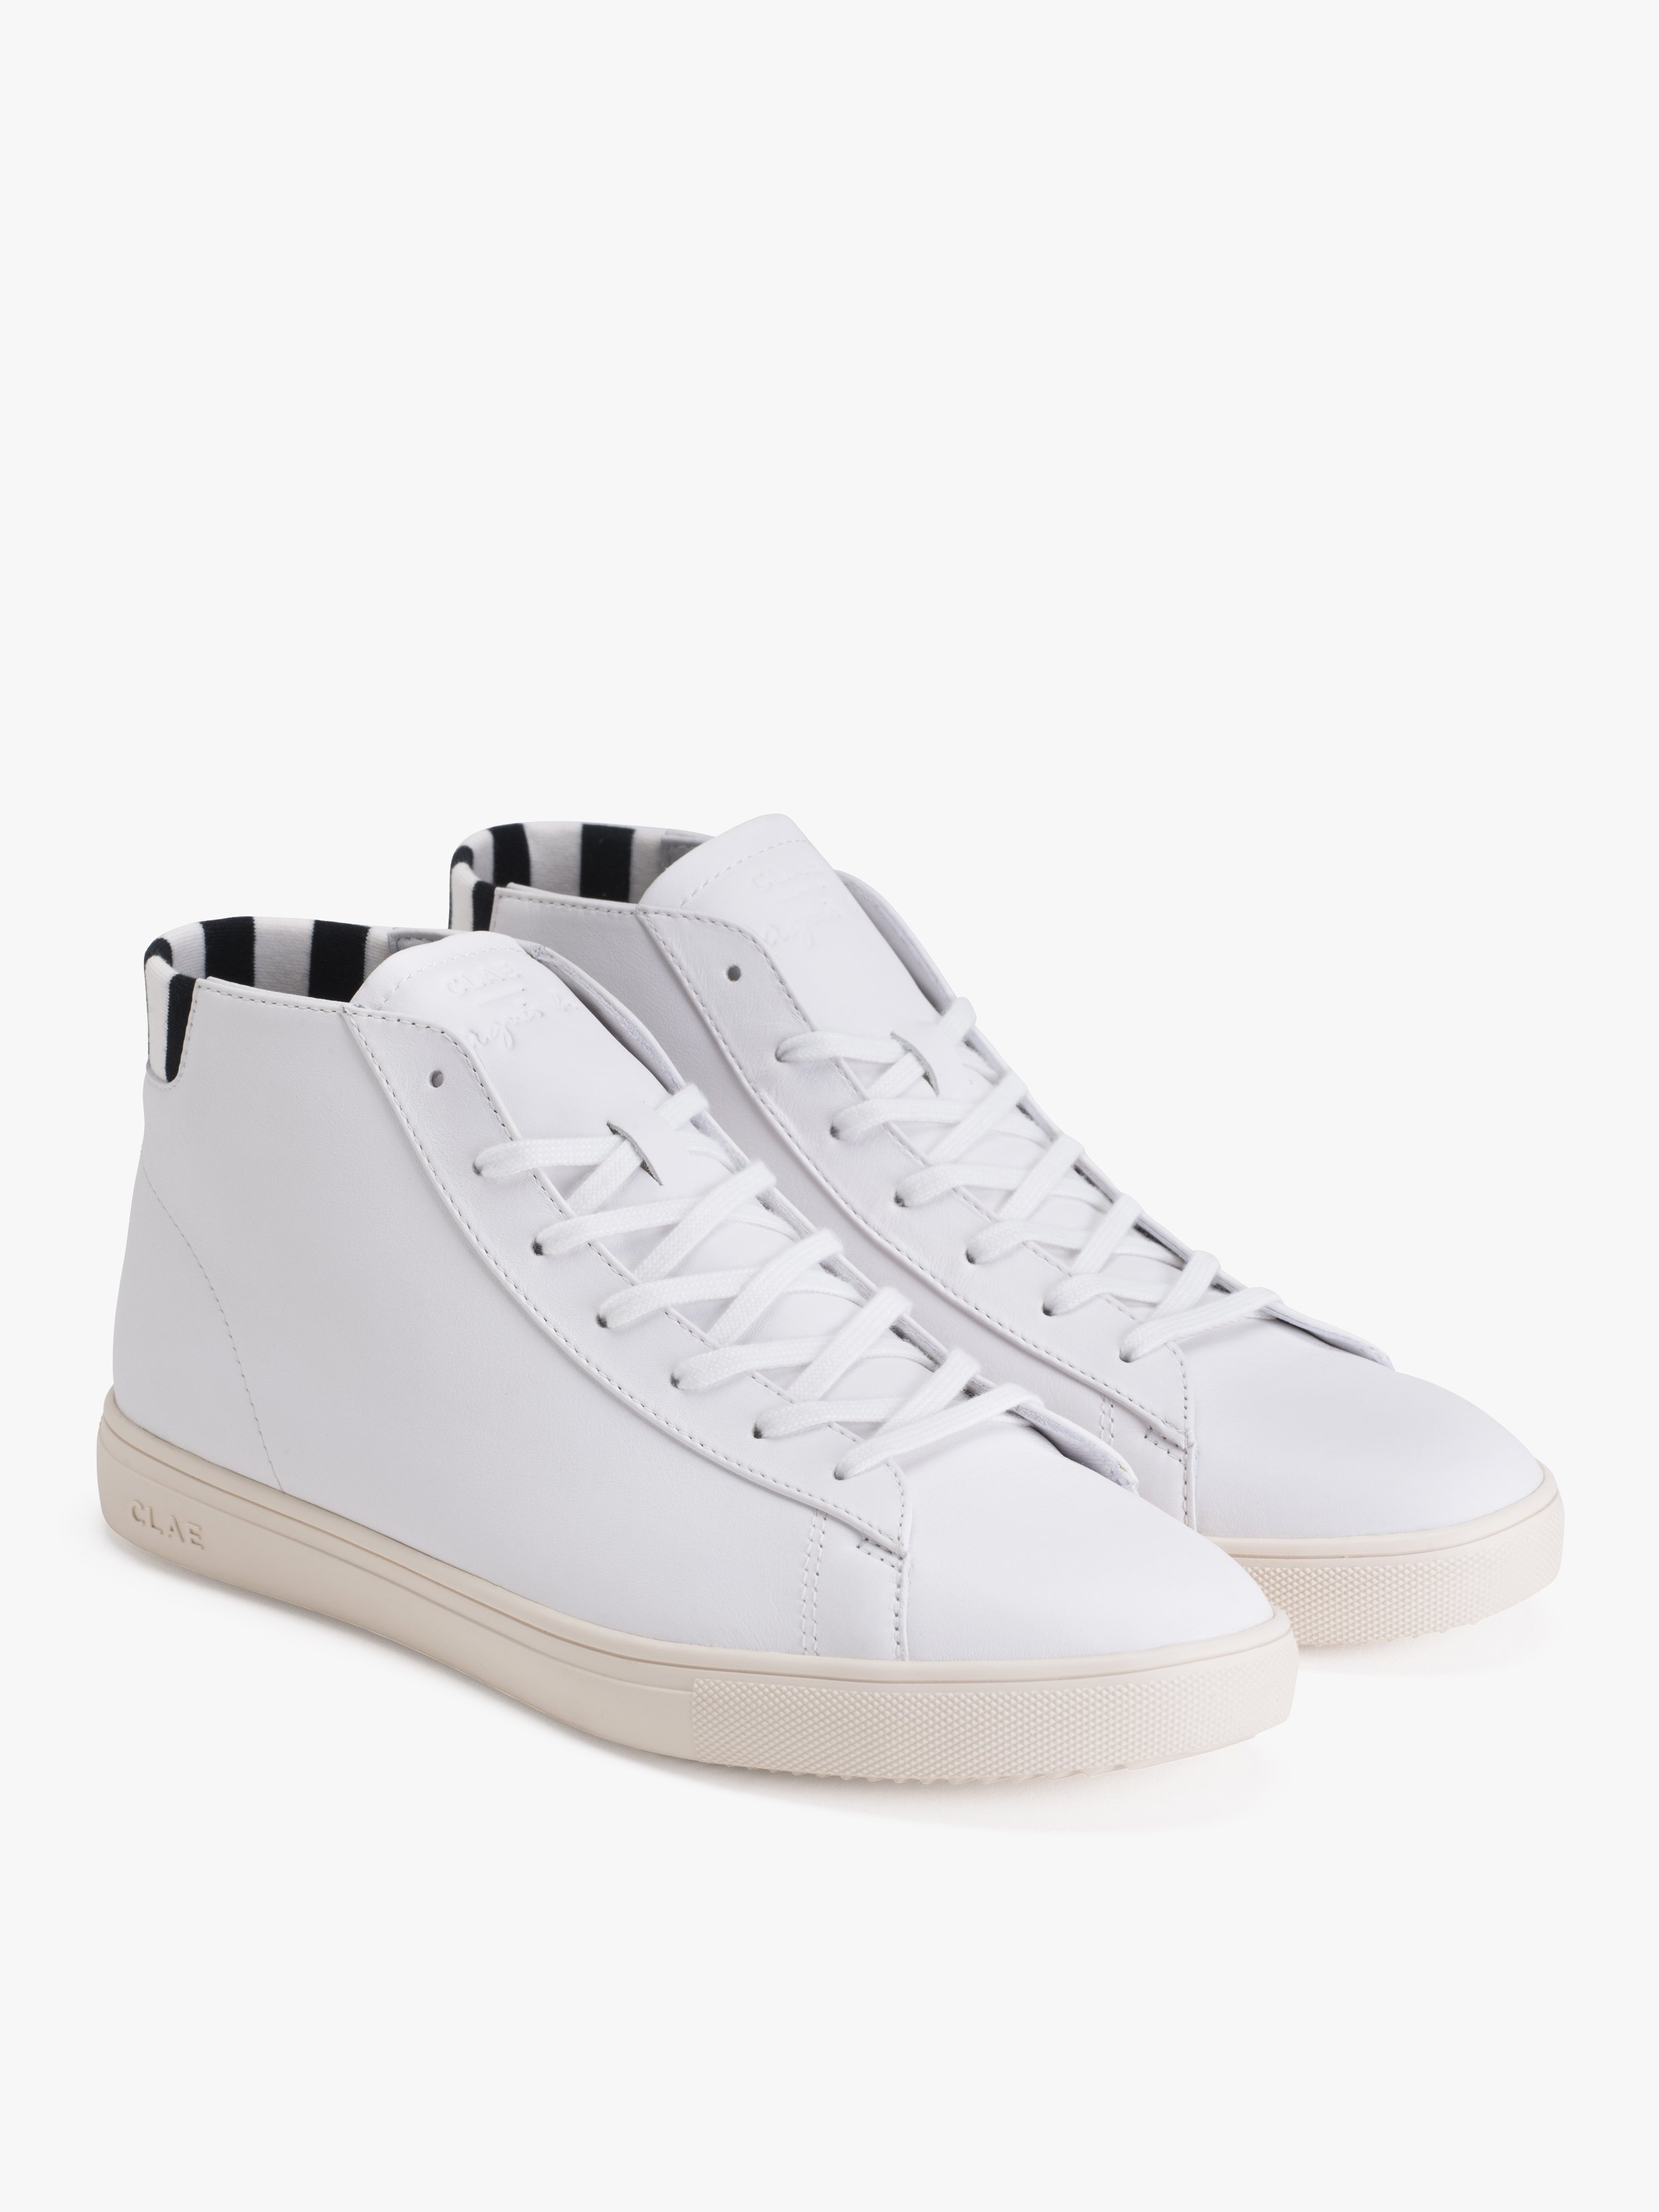 white Clae high-top sneakers | b.